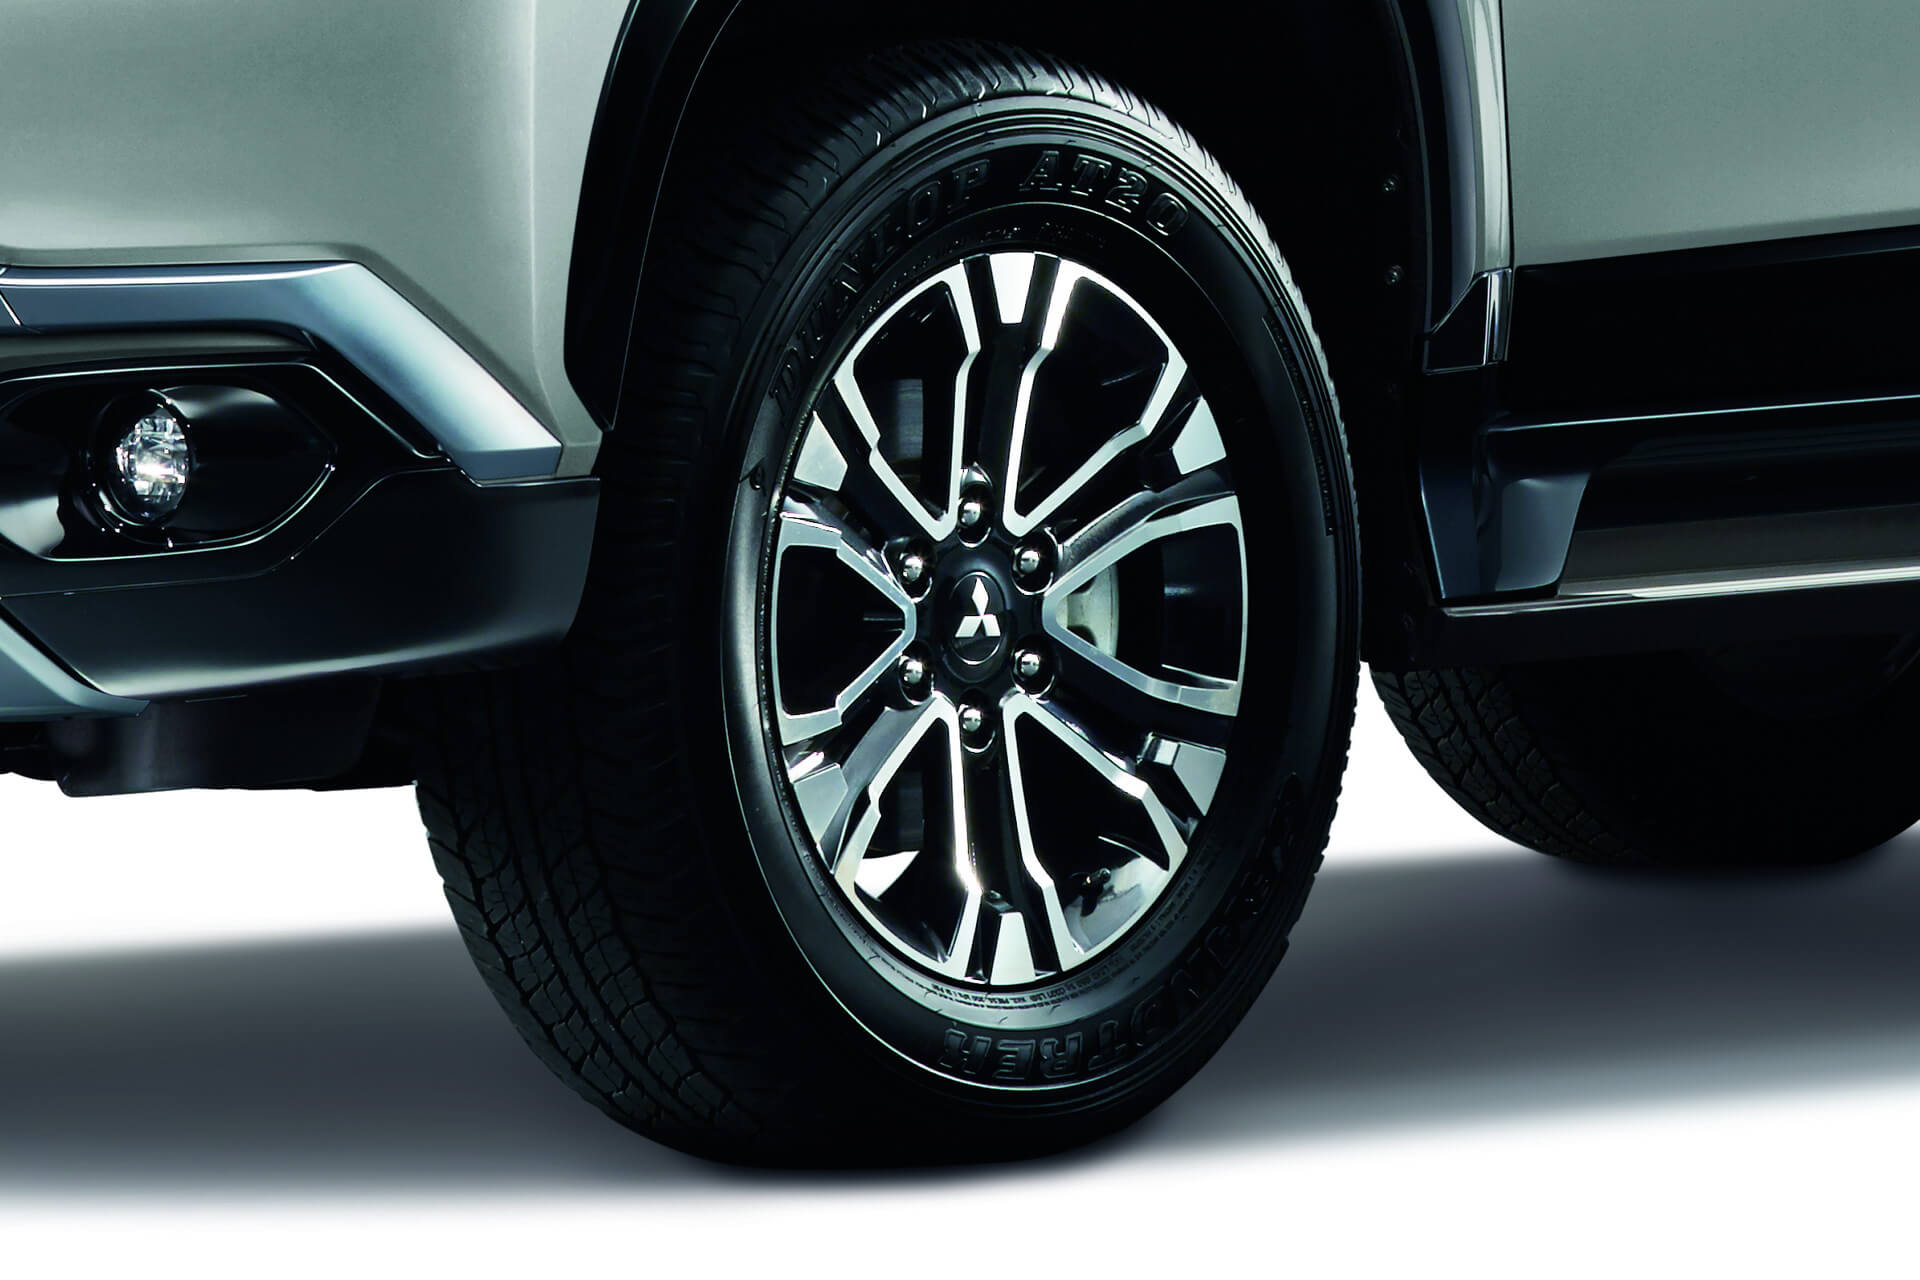 Mitsubishi Pajero Sport 18 inch alloy wheel with 6 spokes, mounted to car